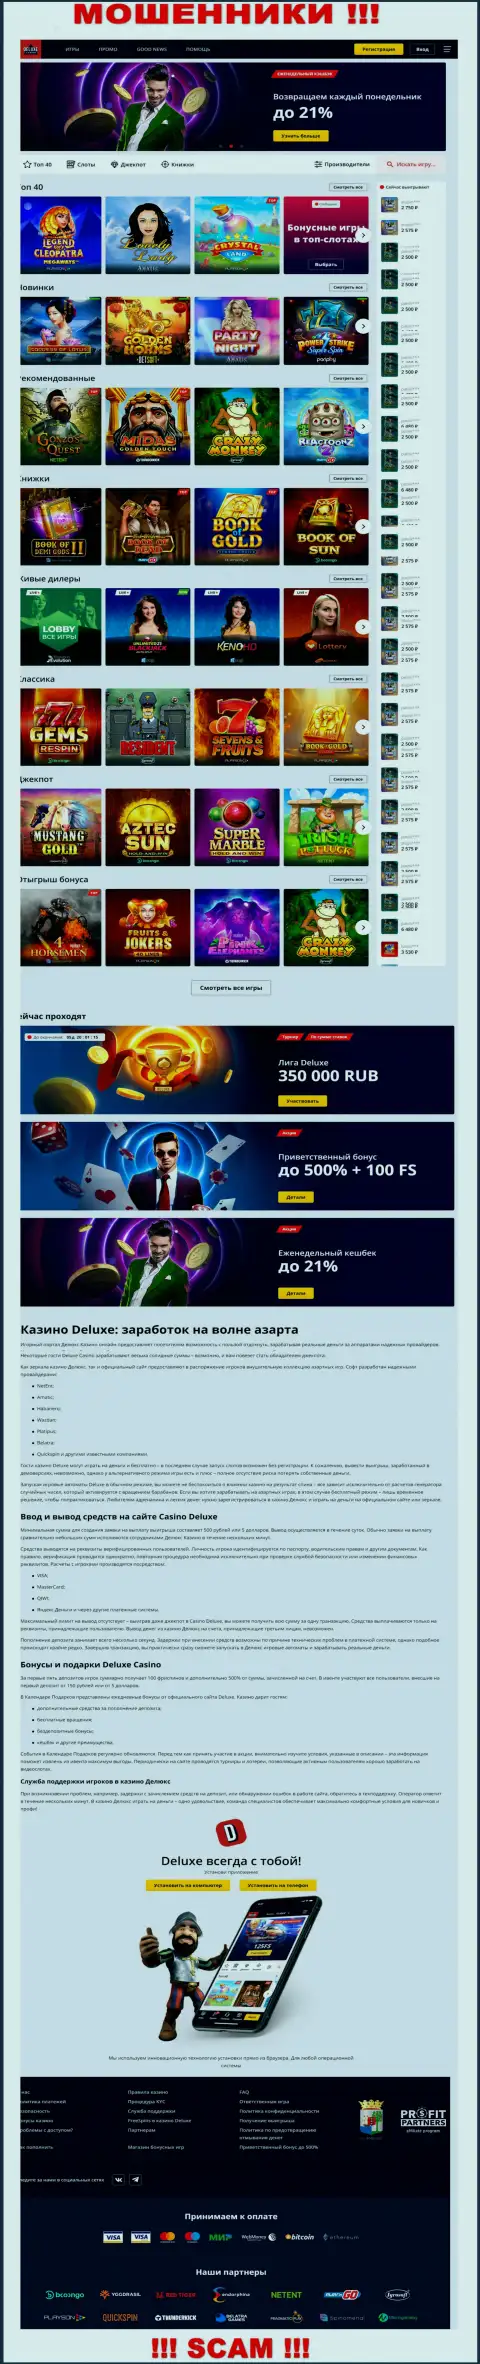 Официальная онлайн страница организации Deluxe Casino